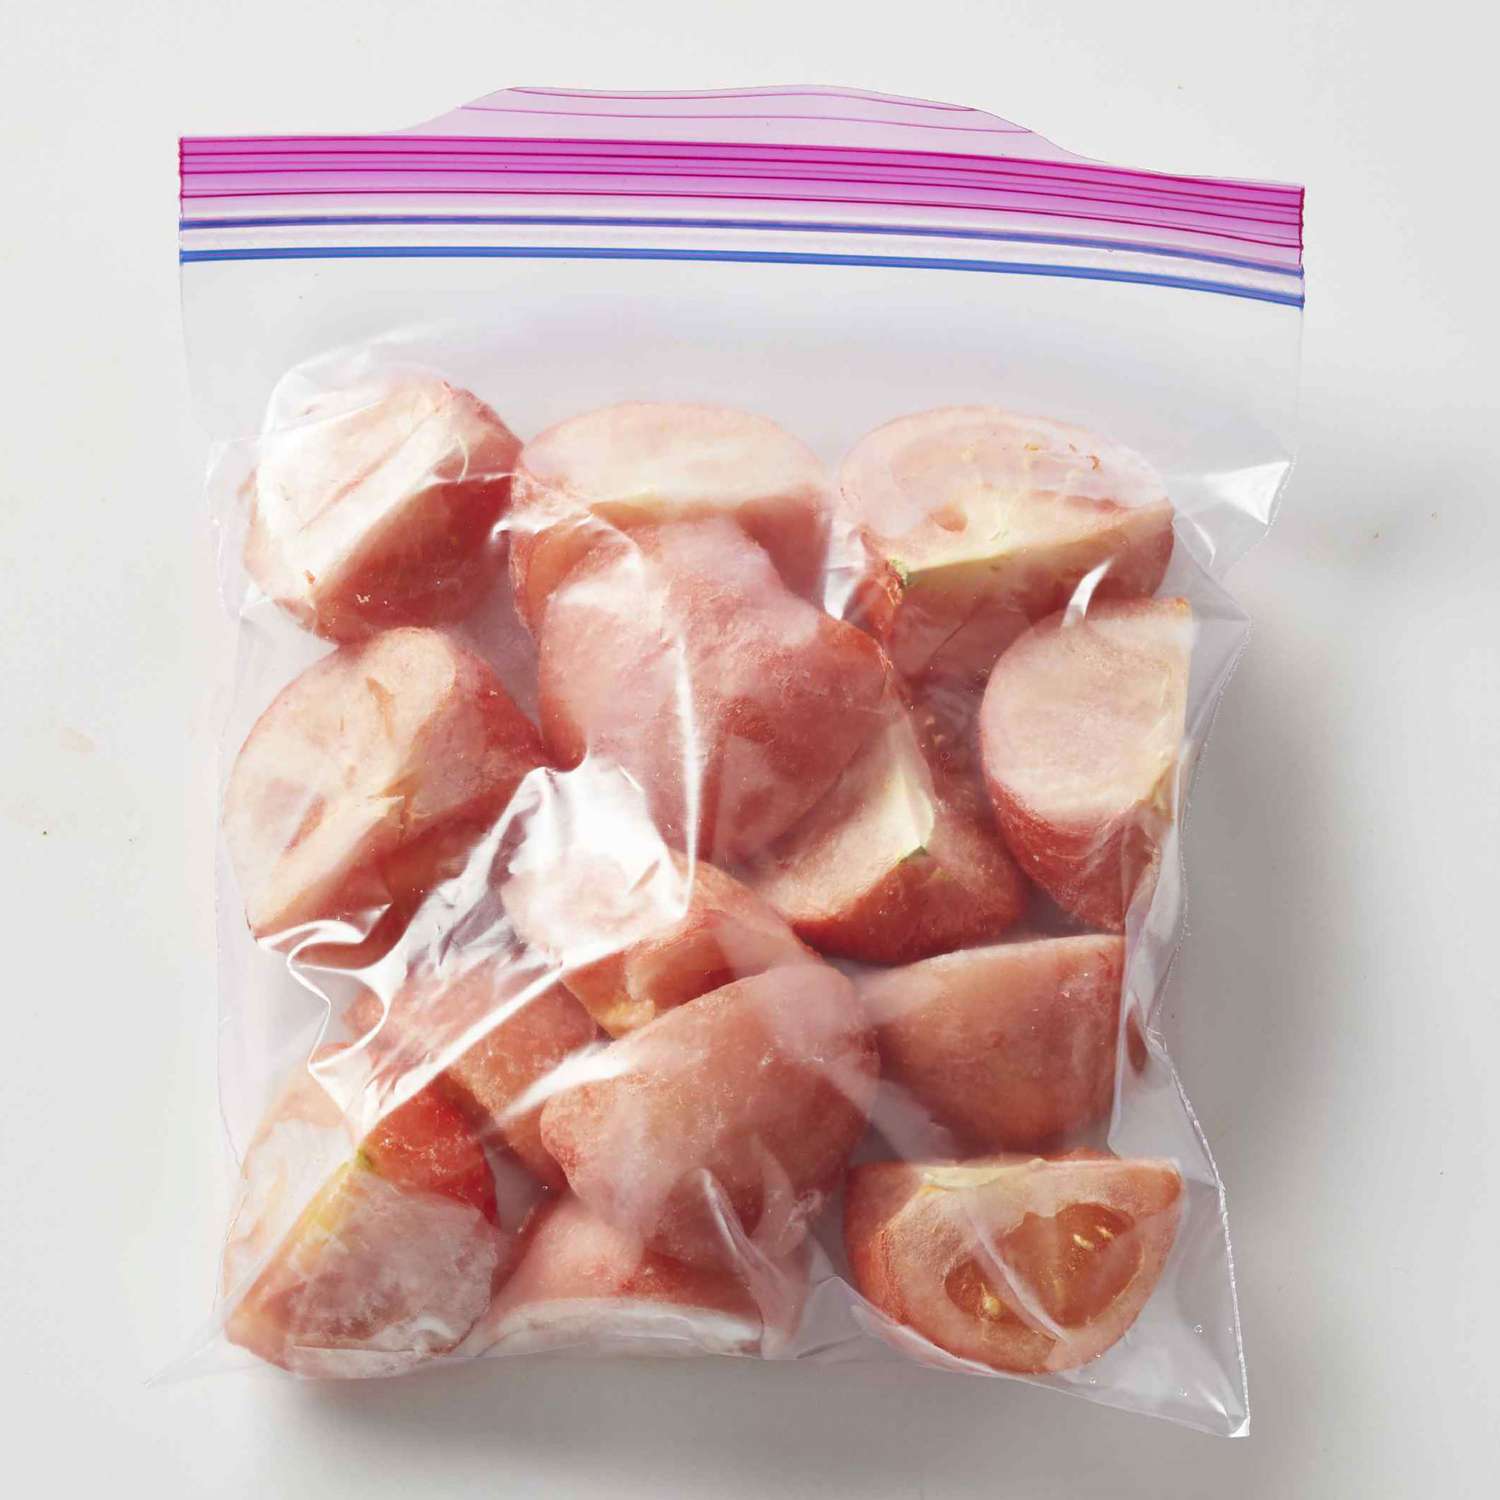 Frozen tomatoes in freezer bags